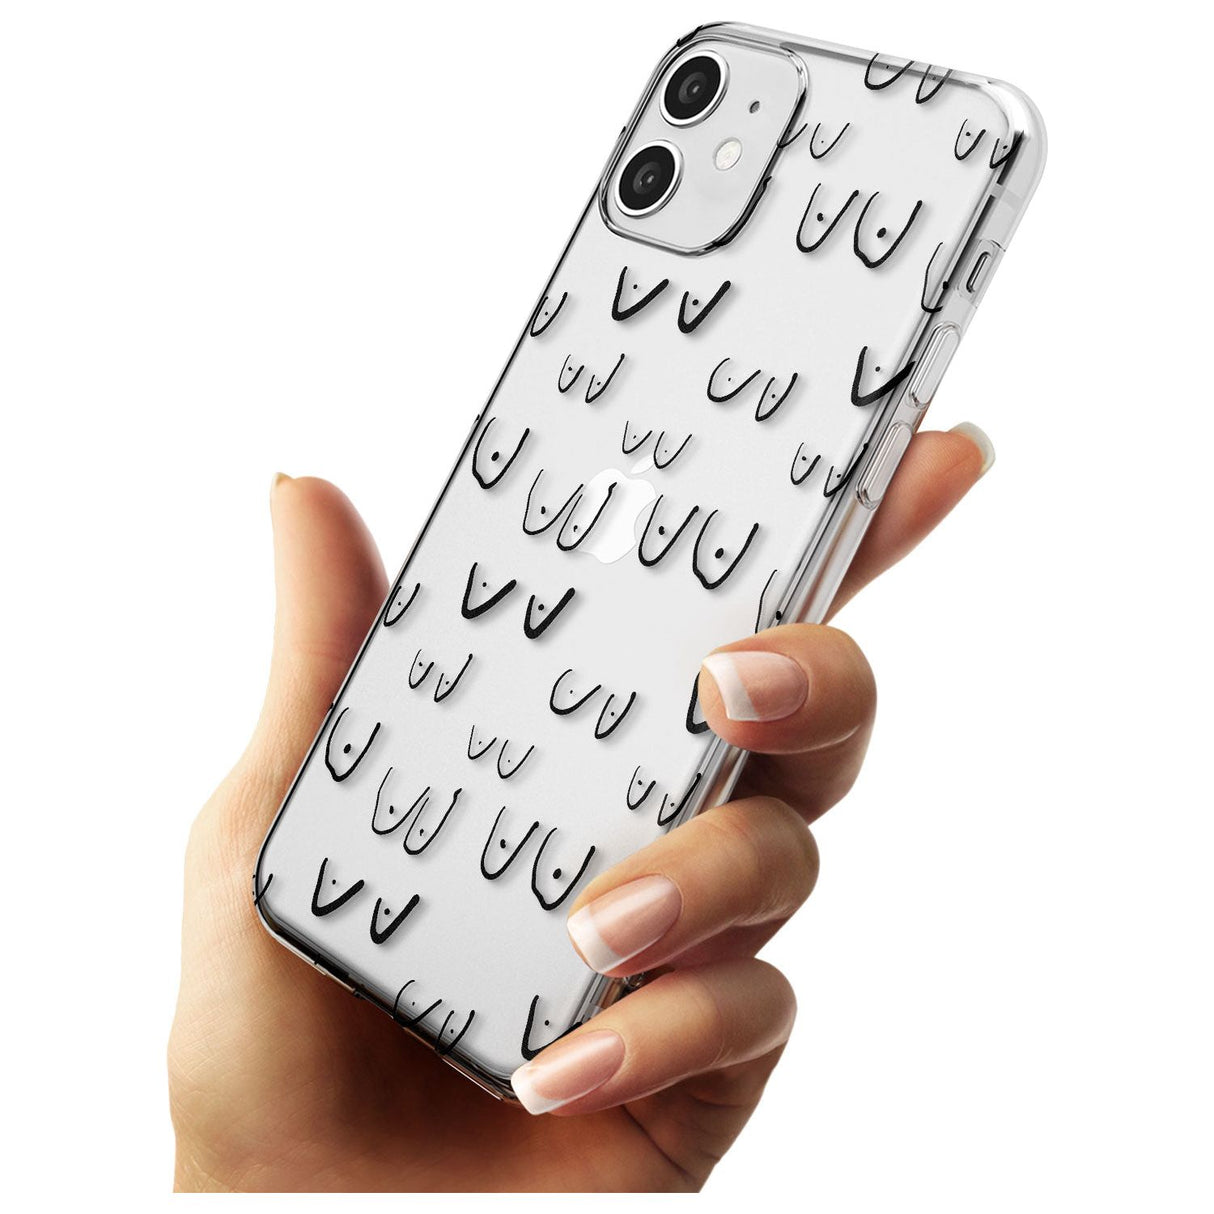 Boob Pattern (Black) Black Impact Phone Case for iPhone 11